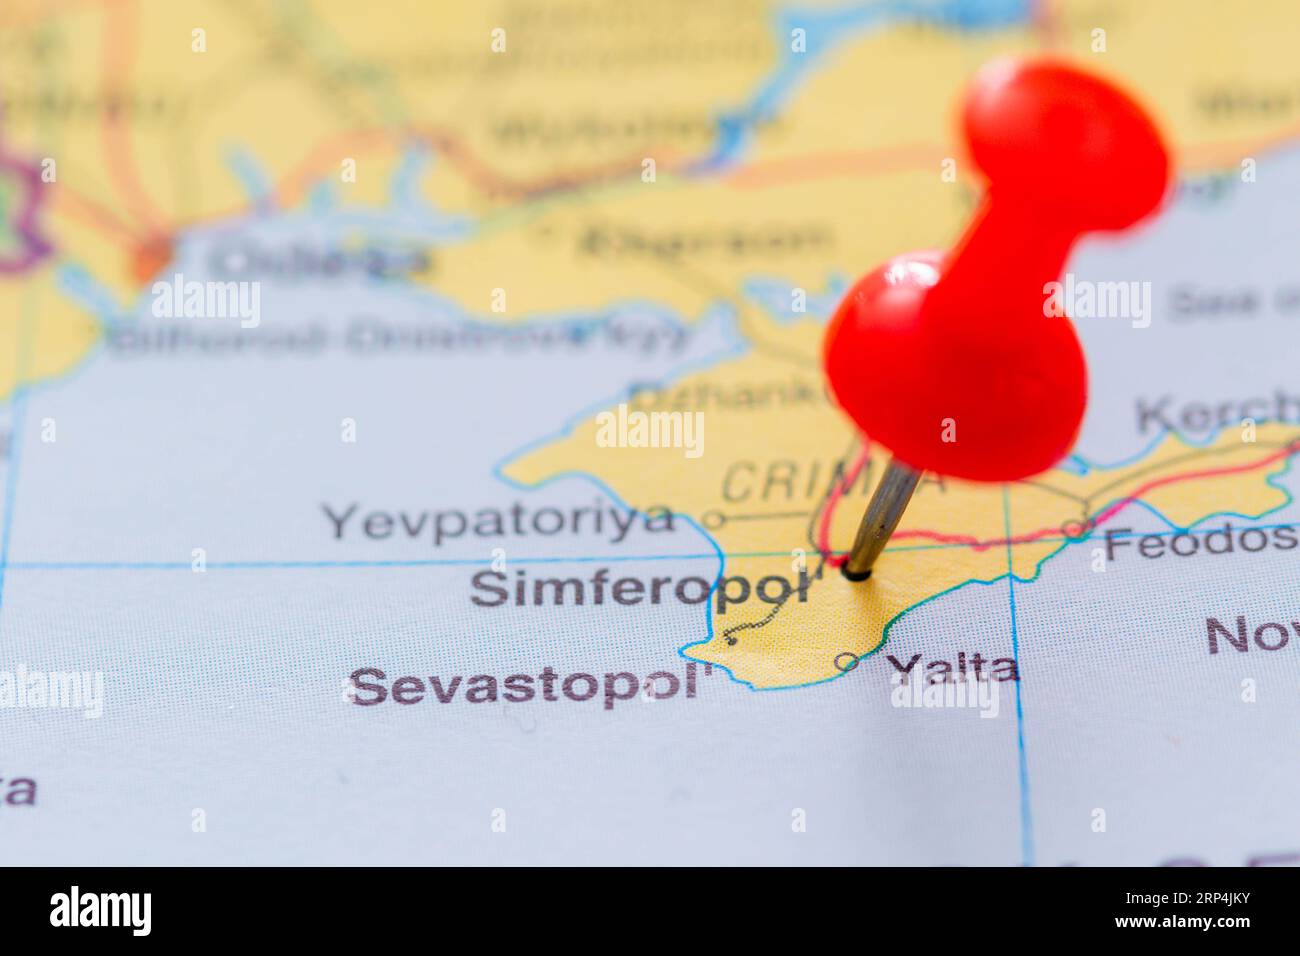 The location of Simferopol pinned on a map of Crimea Stock Photo